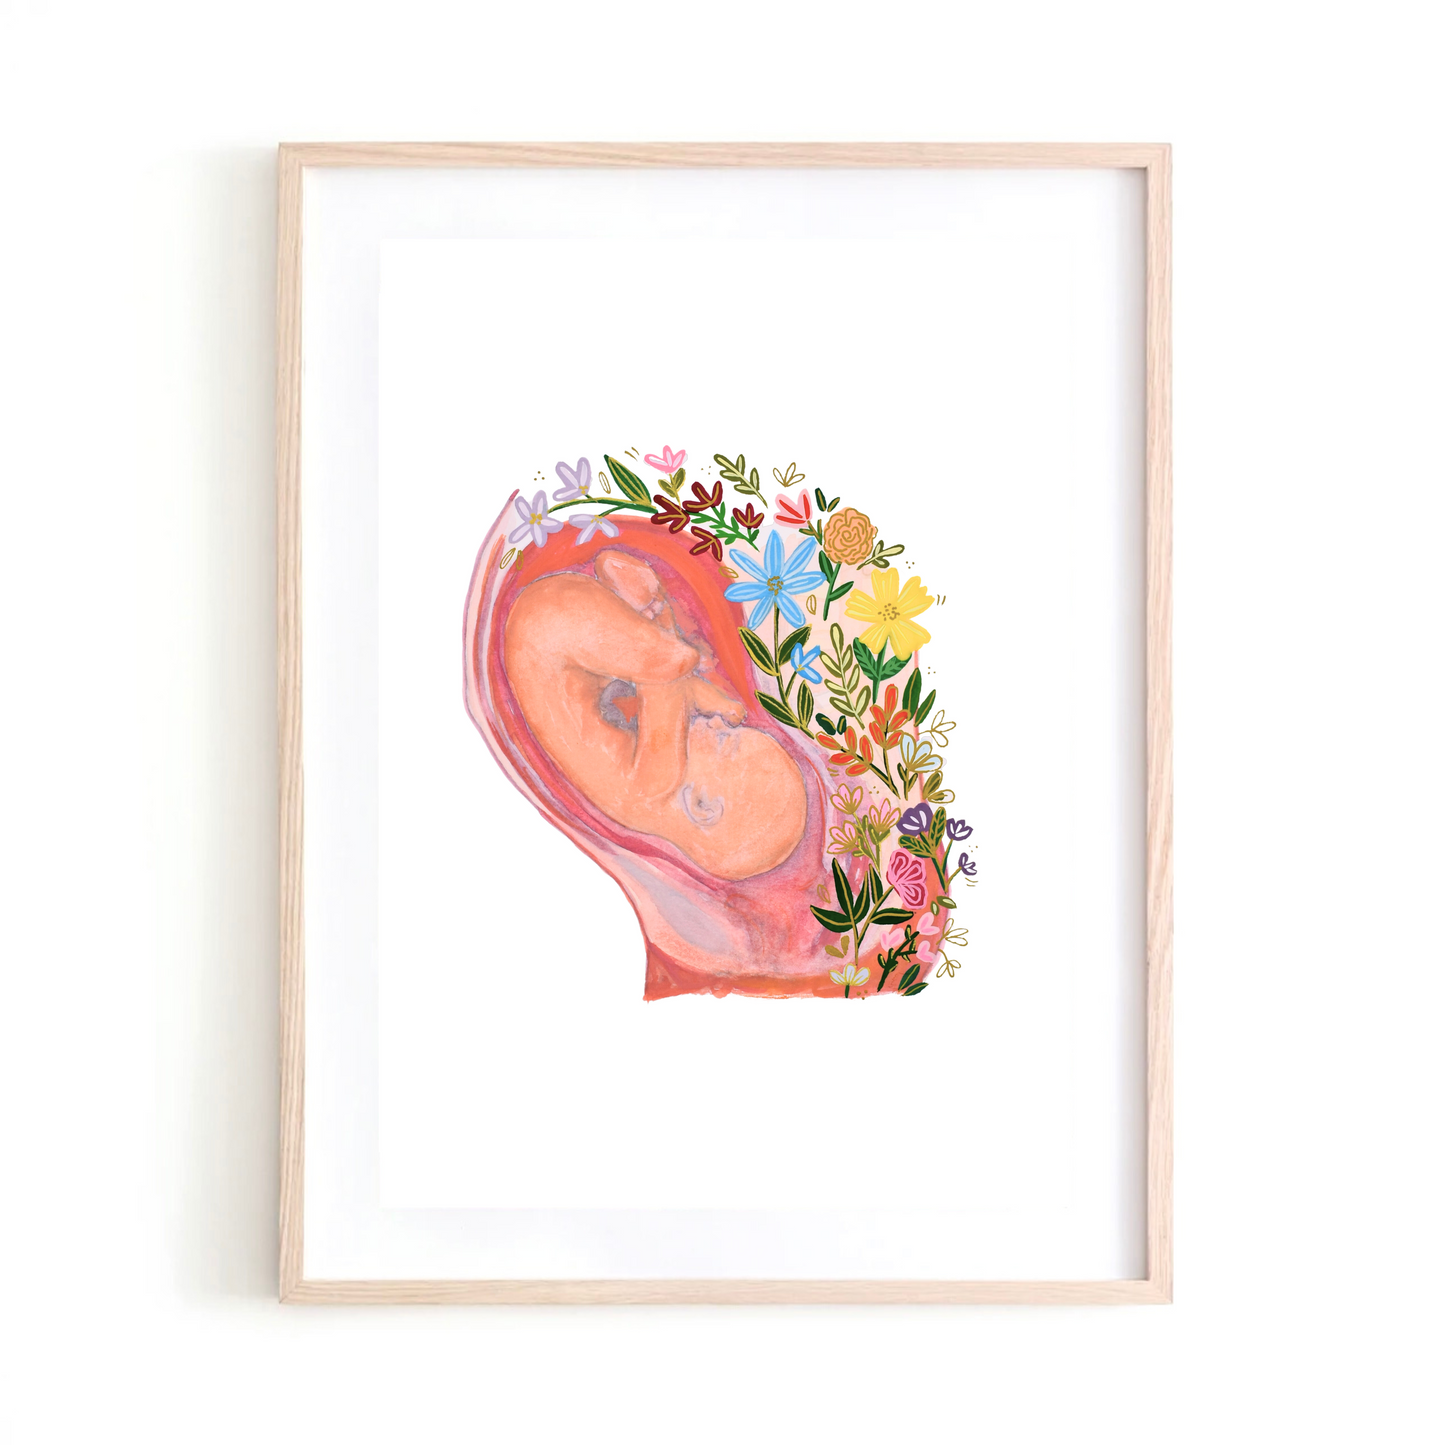 Gestation Medicine & Flowers art print